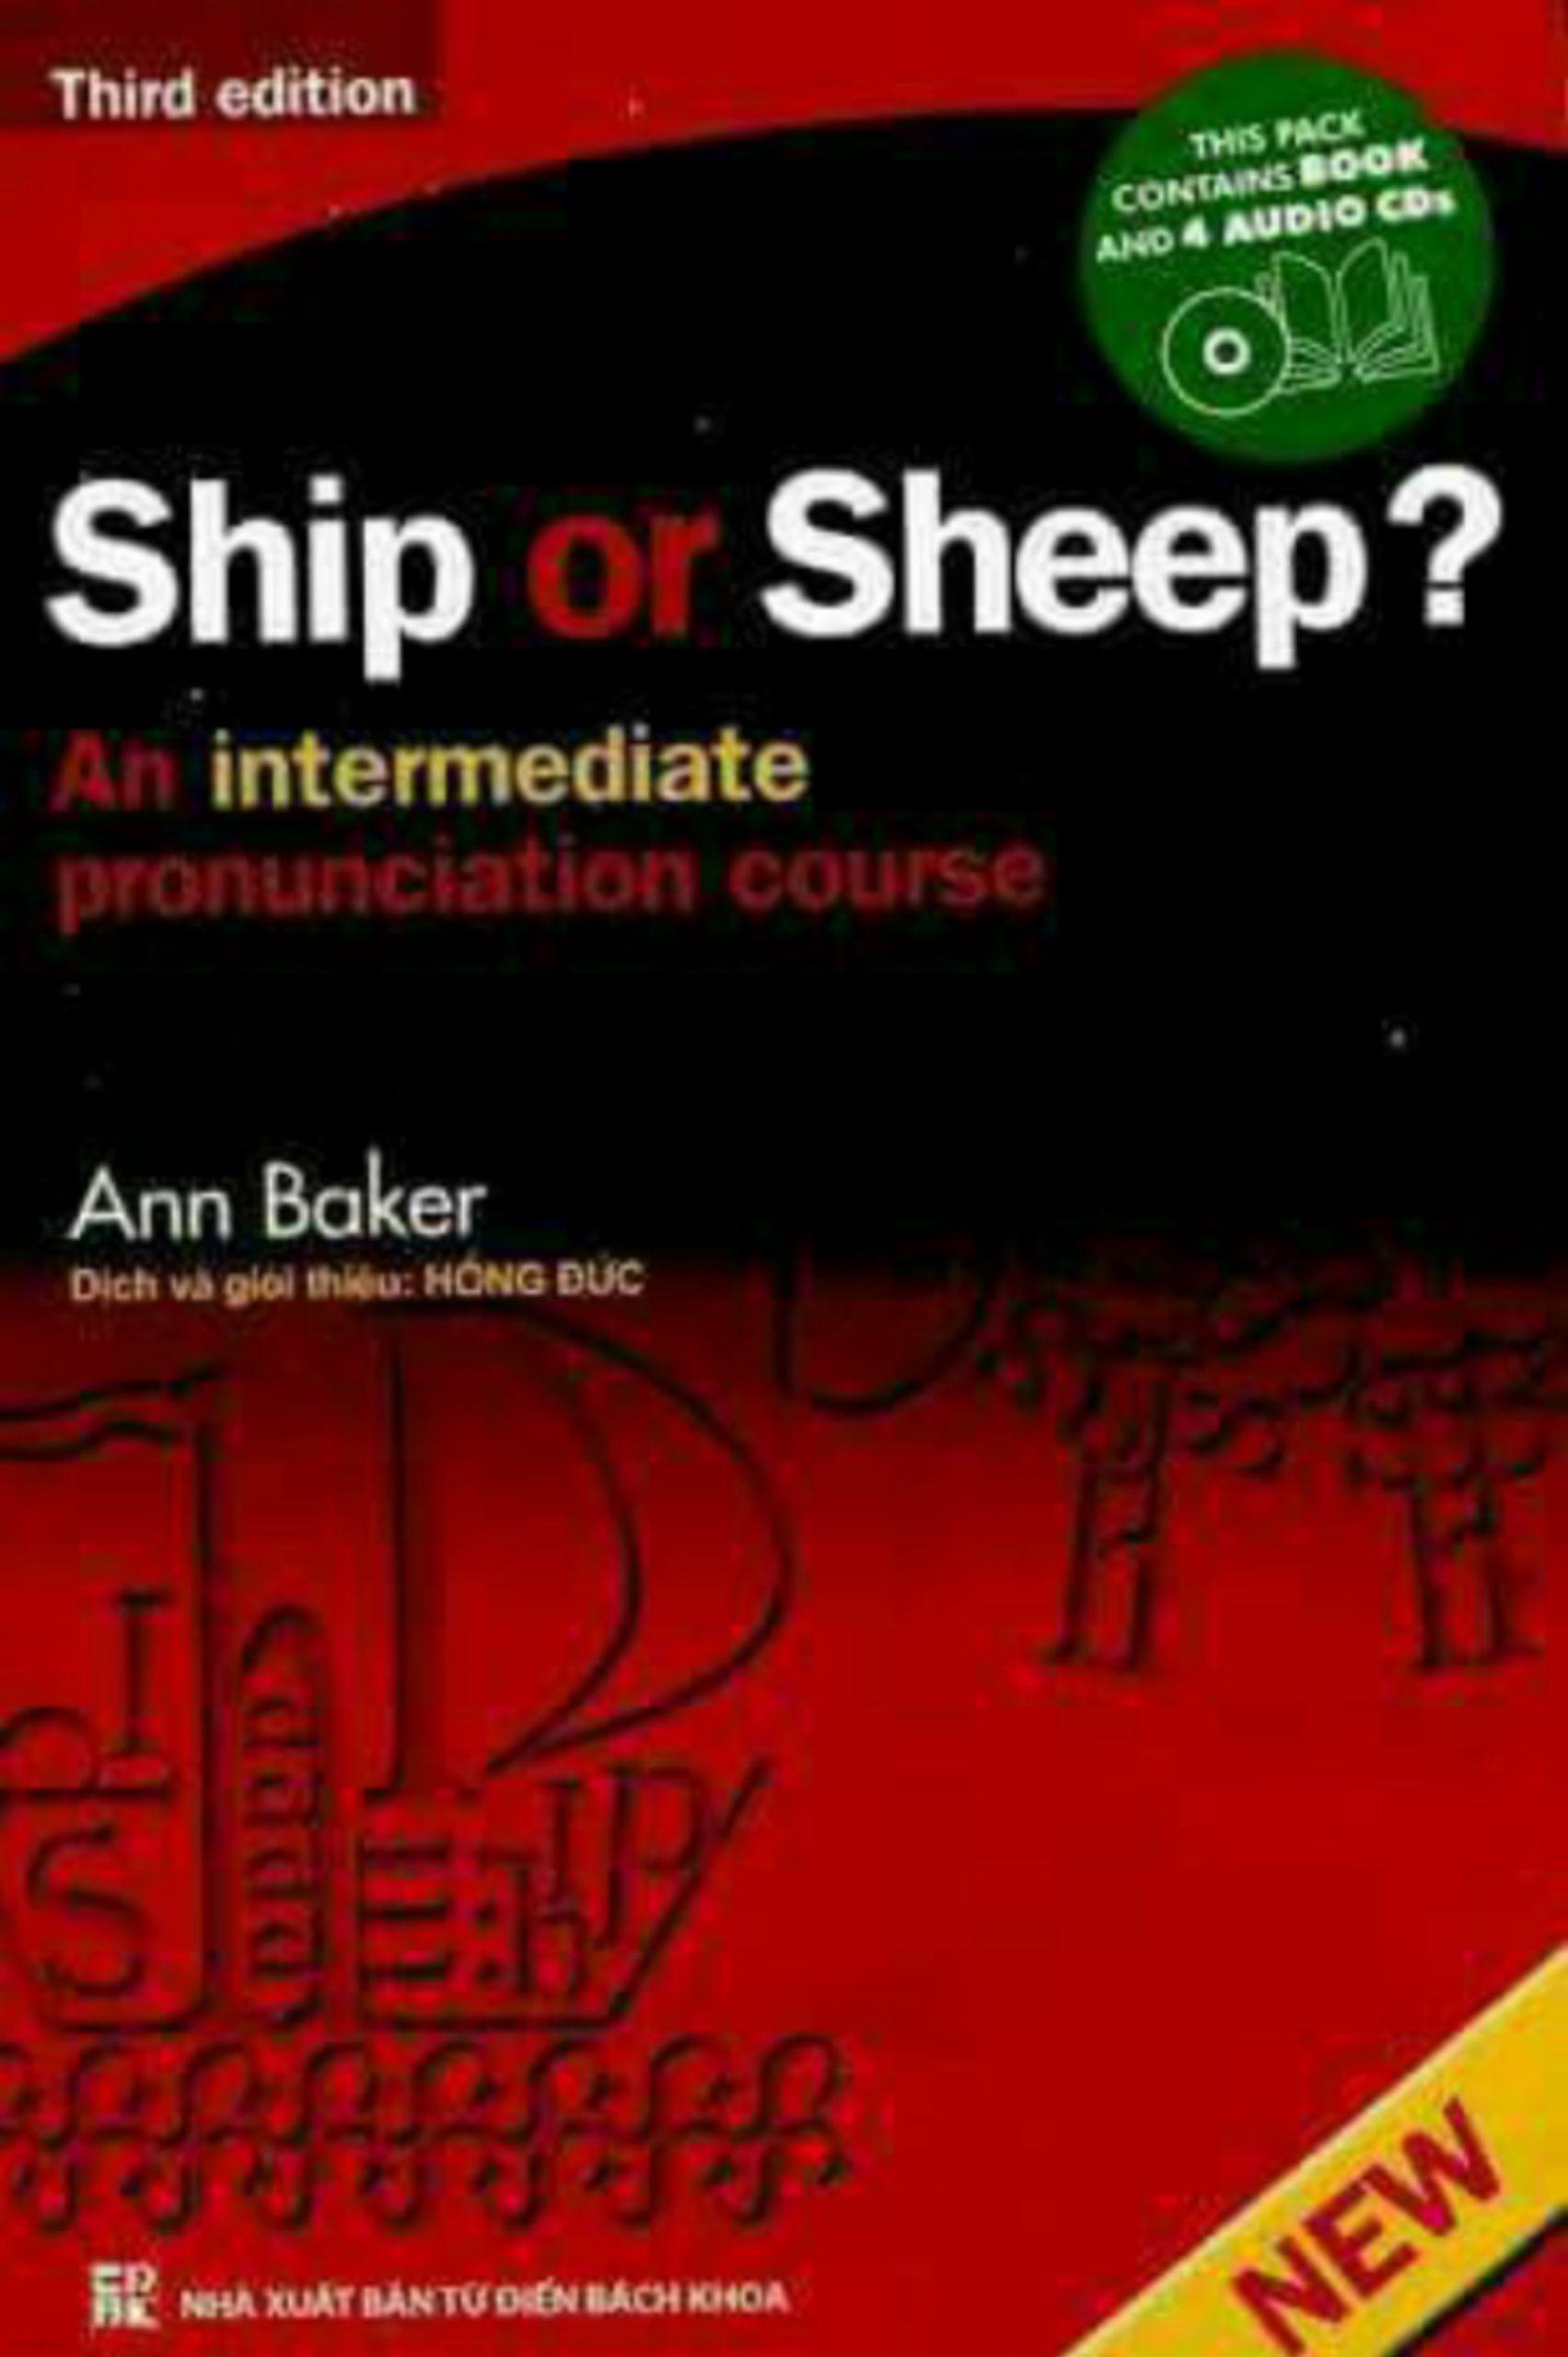 دانلود کتاب انگلیسی Ship or Sheep